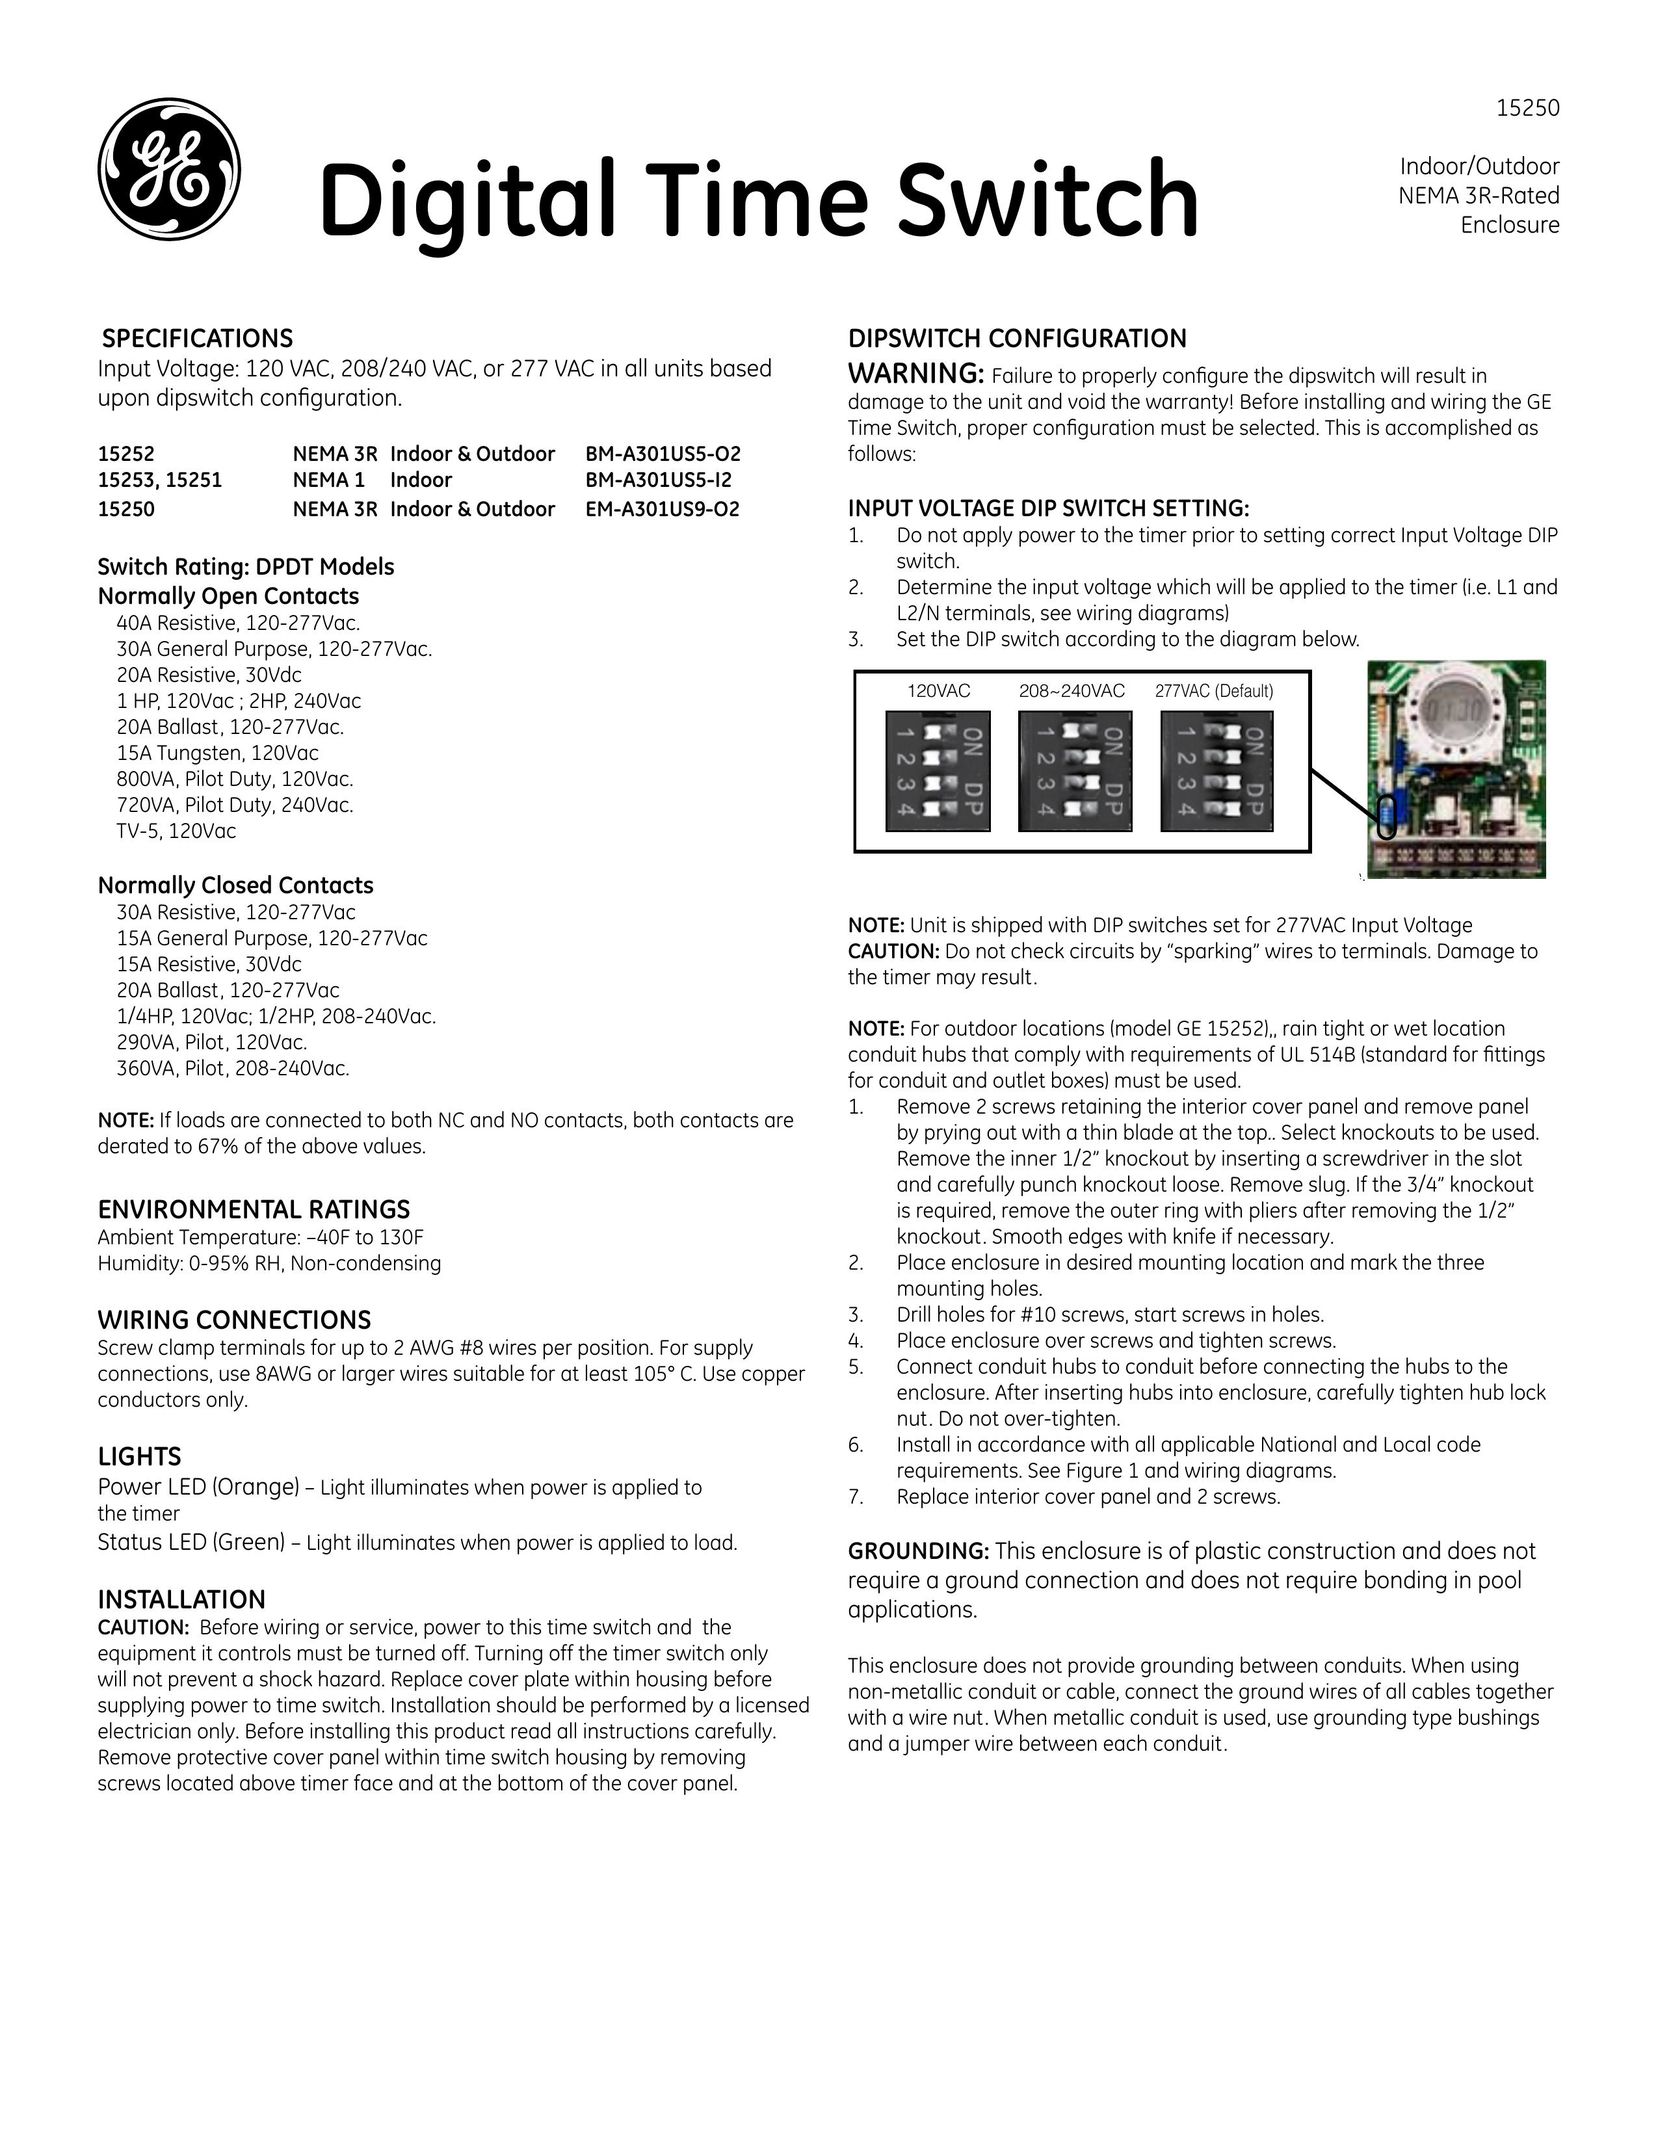 GE BM-A301US5-I2 Switch User Manual